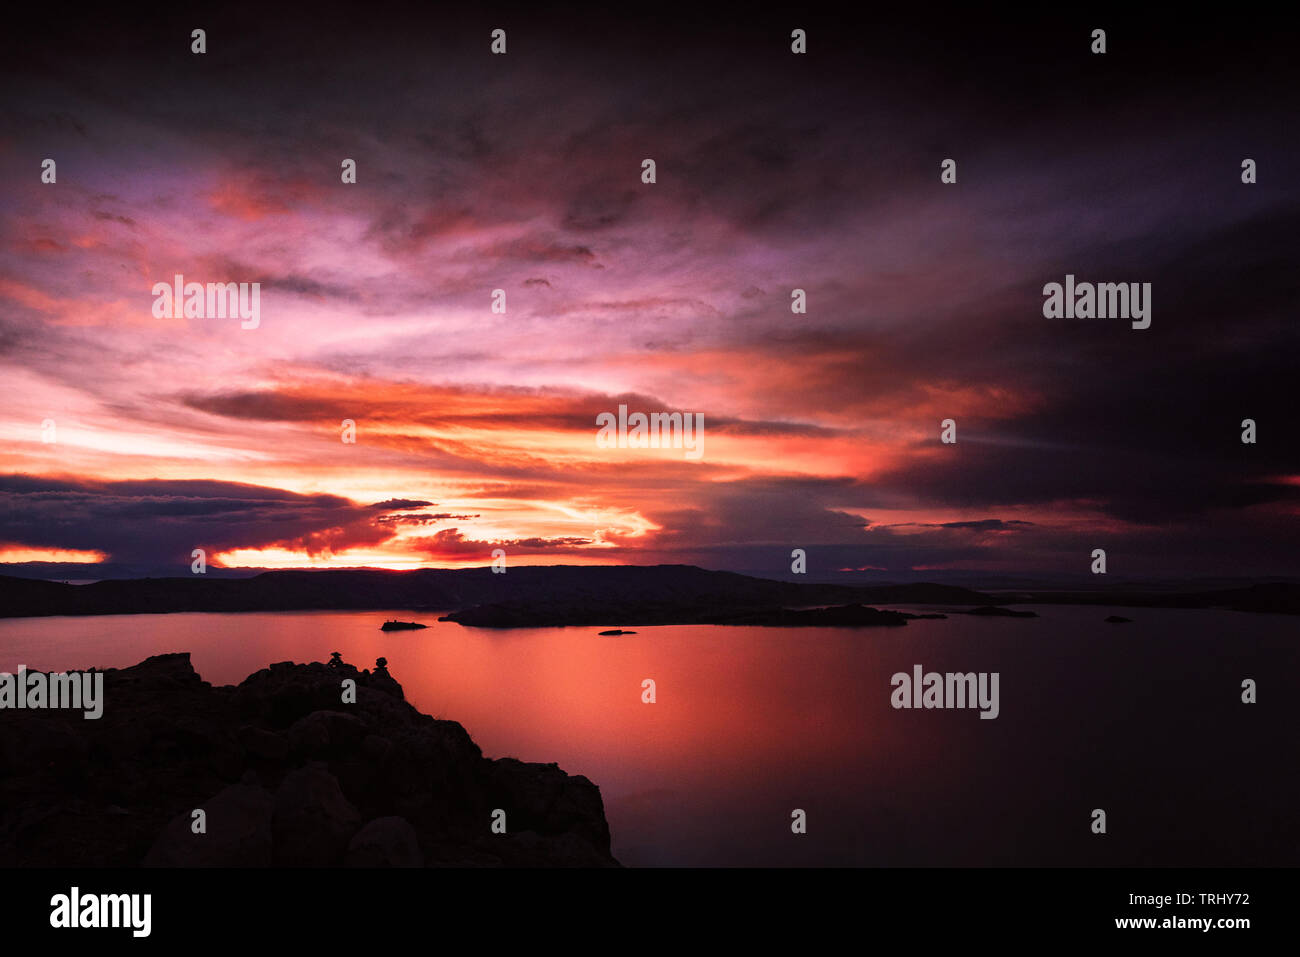 Sunset at Amantani in Peru, overlooking Lake Titicaca Stock Photo